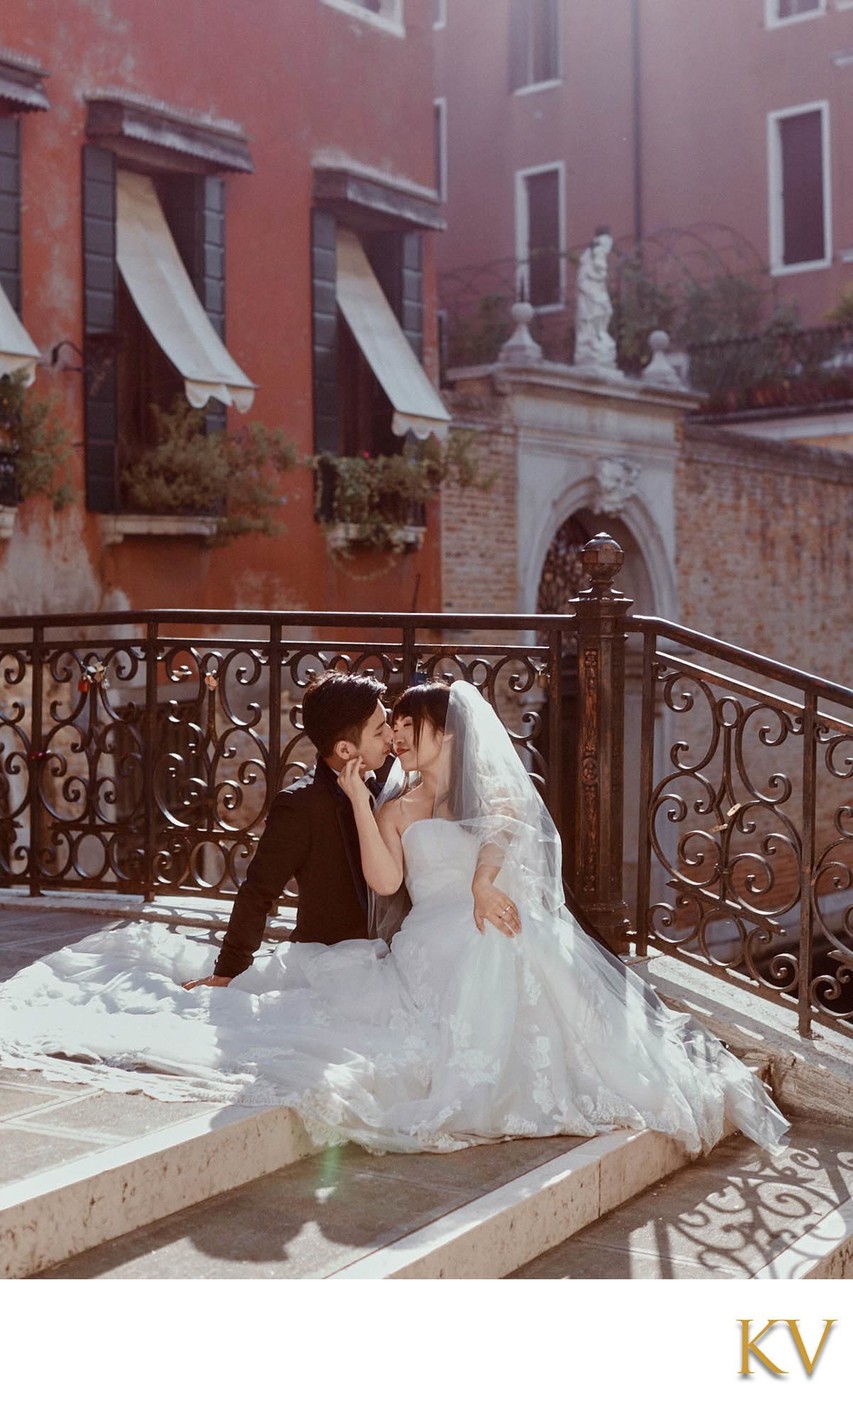 Venice Love Story - bride caressing her groom